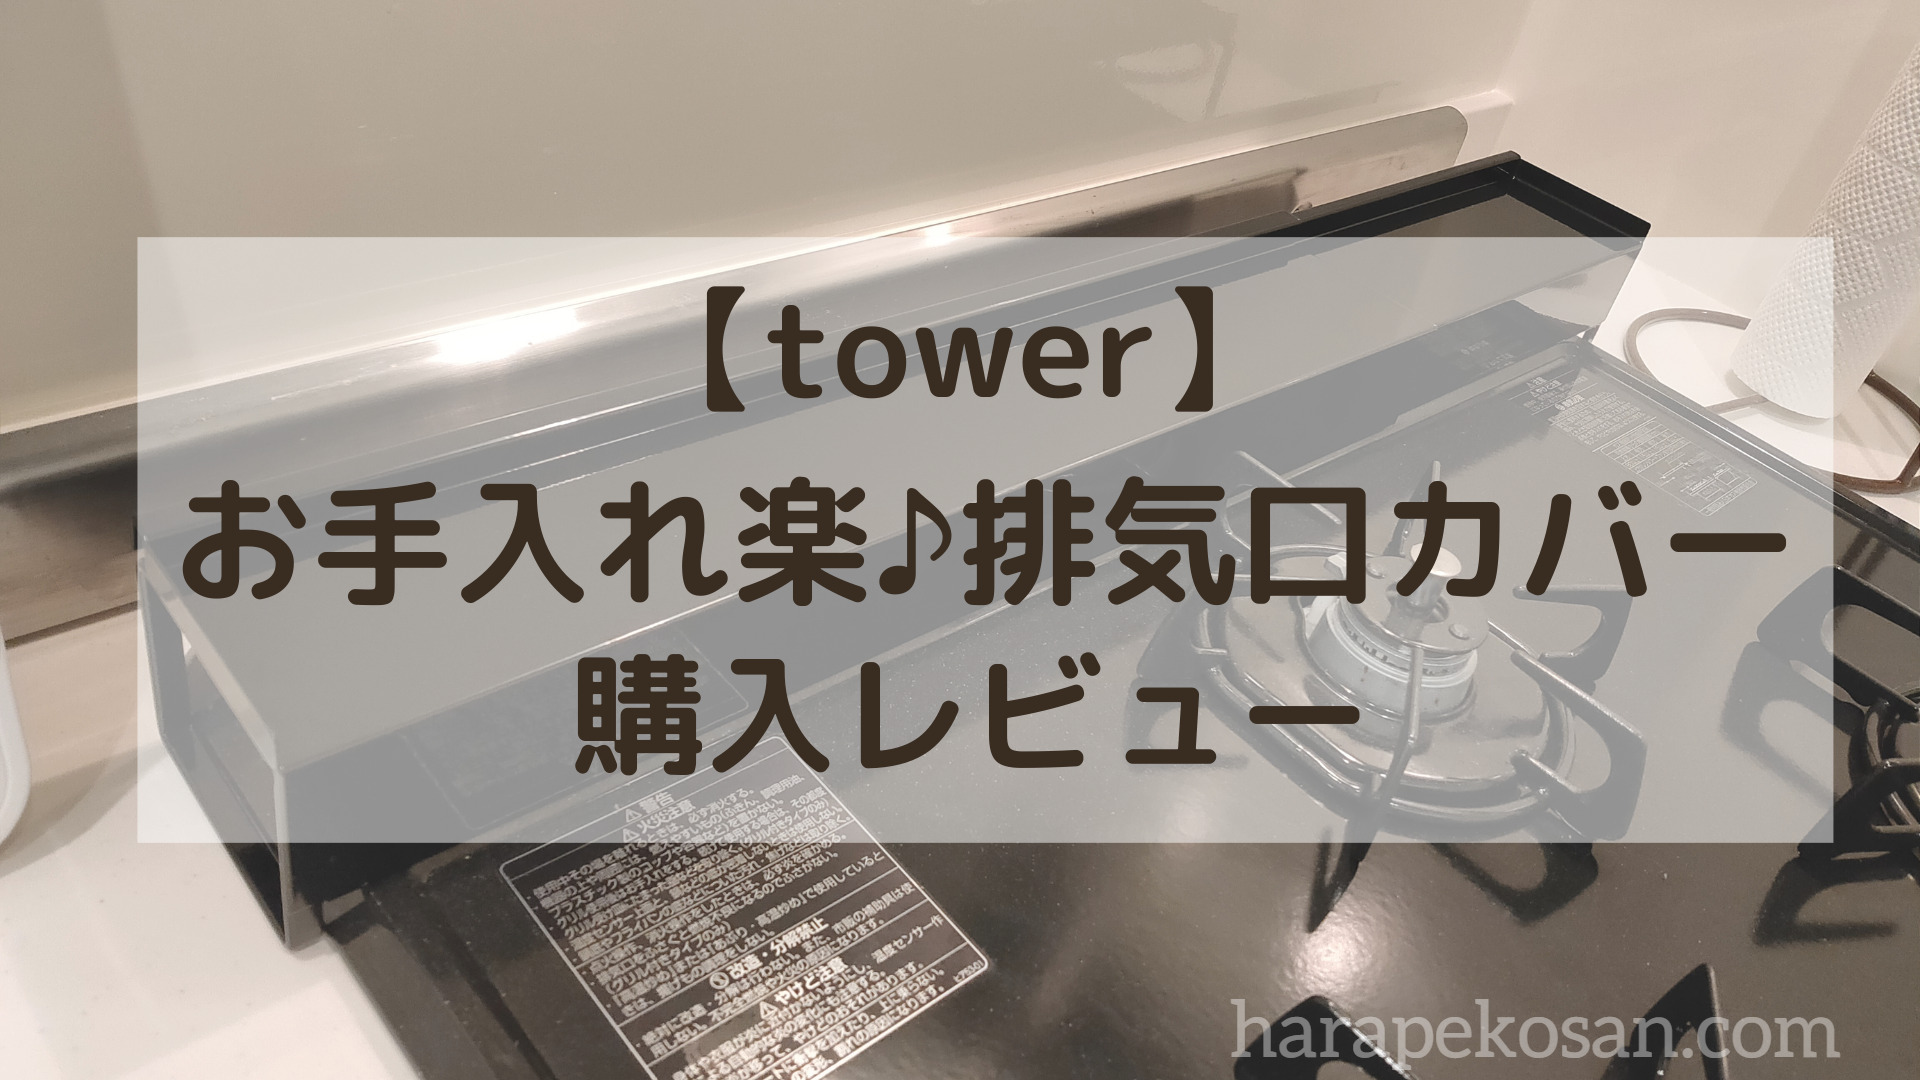 tower排気口カバー